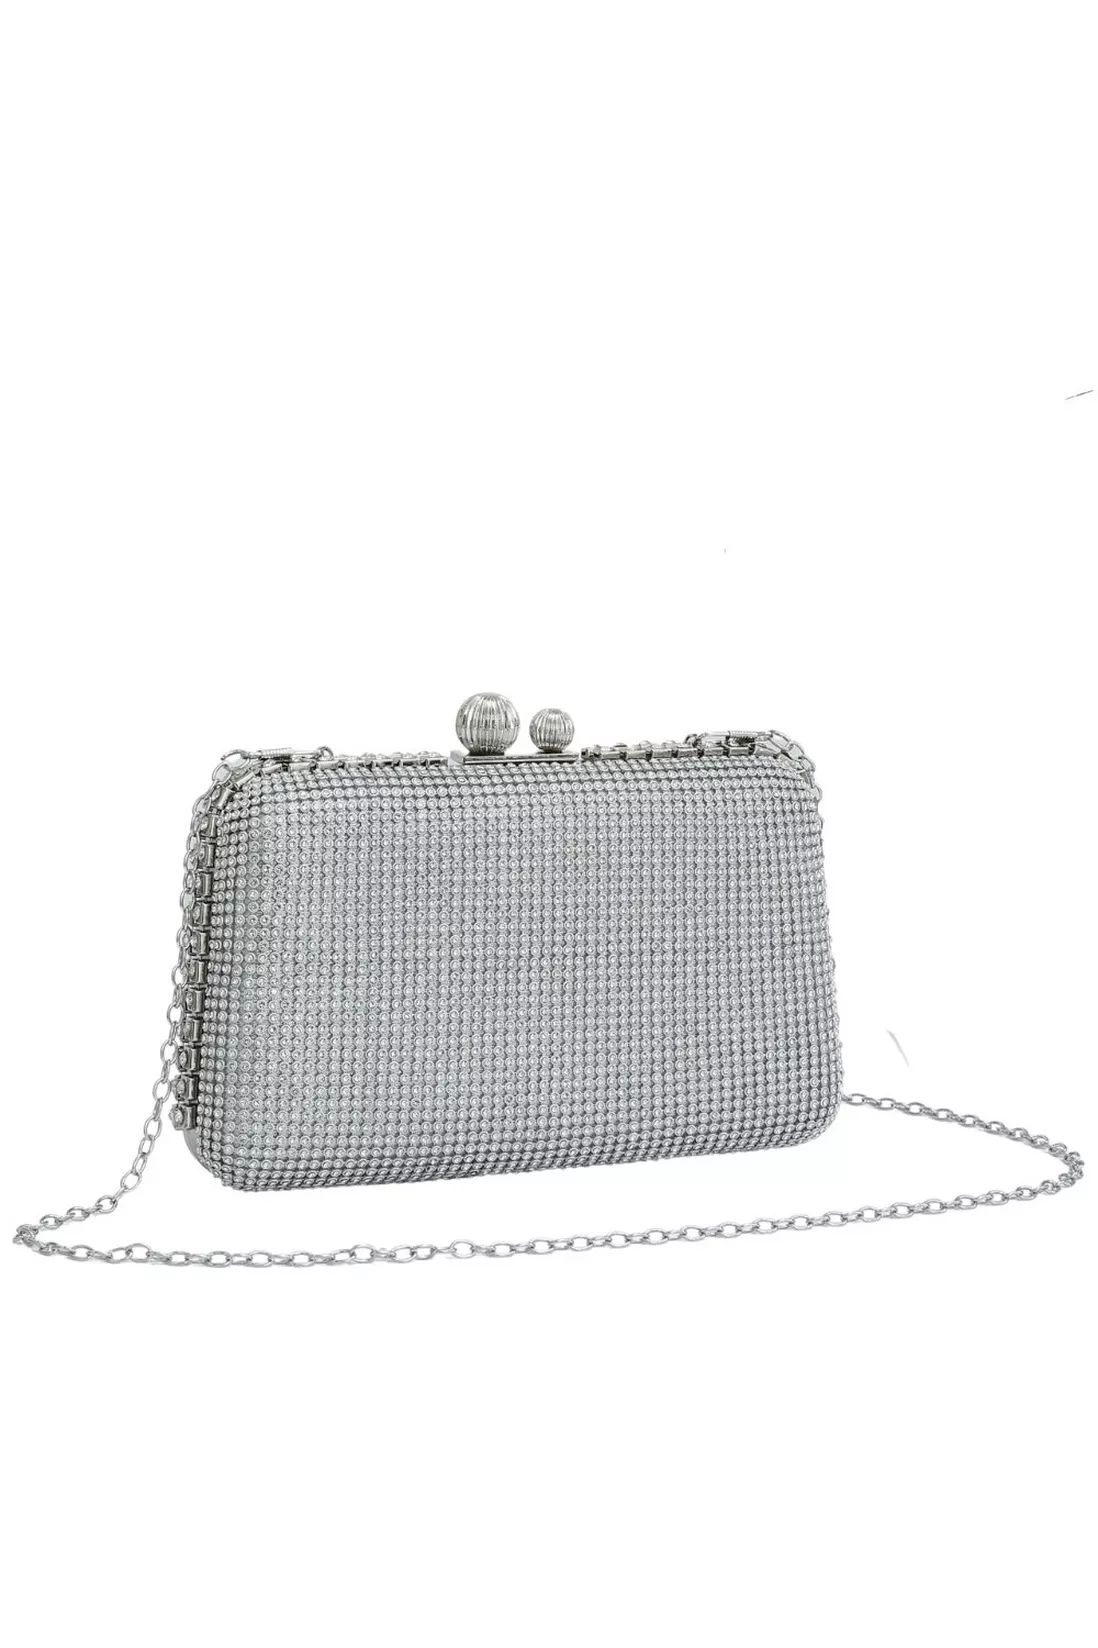 Bags & Purses | Delicada Diamond Embellished Clutch Evening Bag | Fontanella Fashion | Debenhams UK